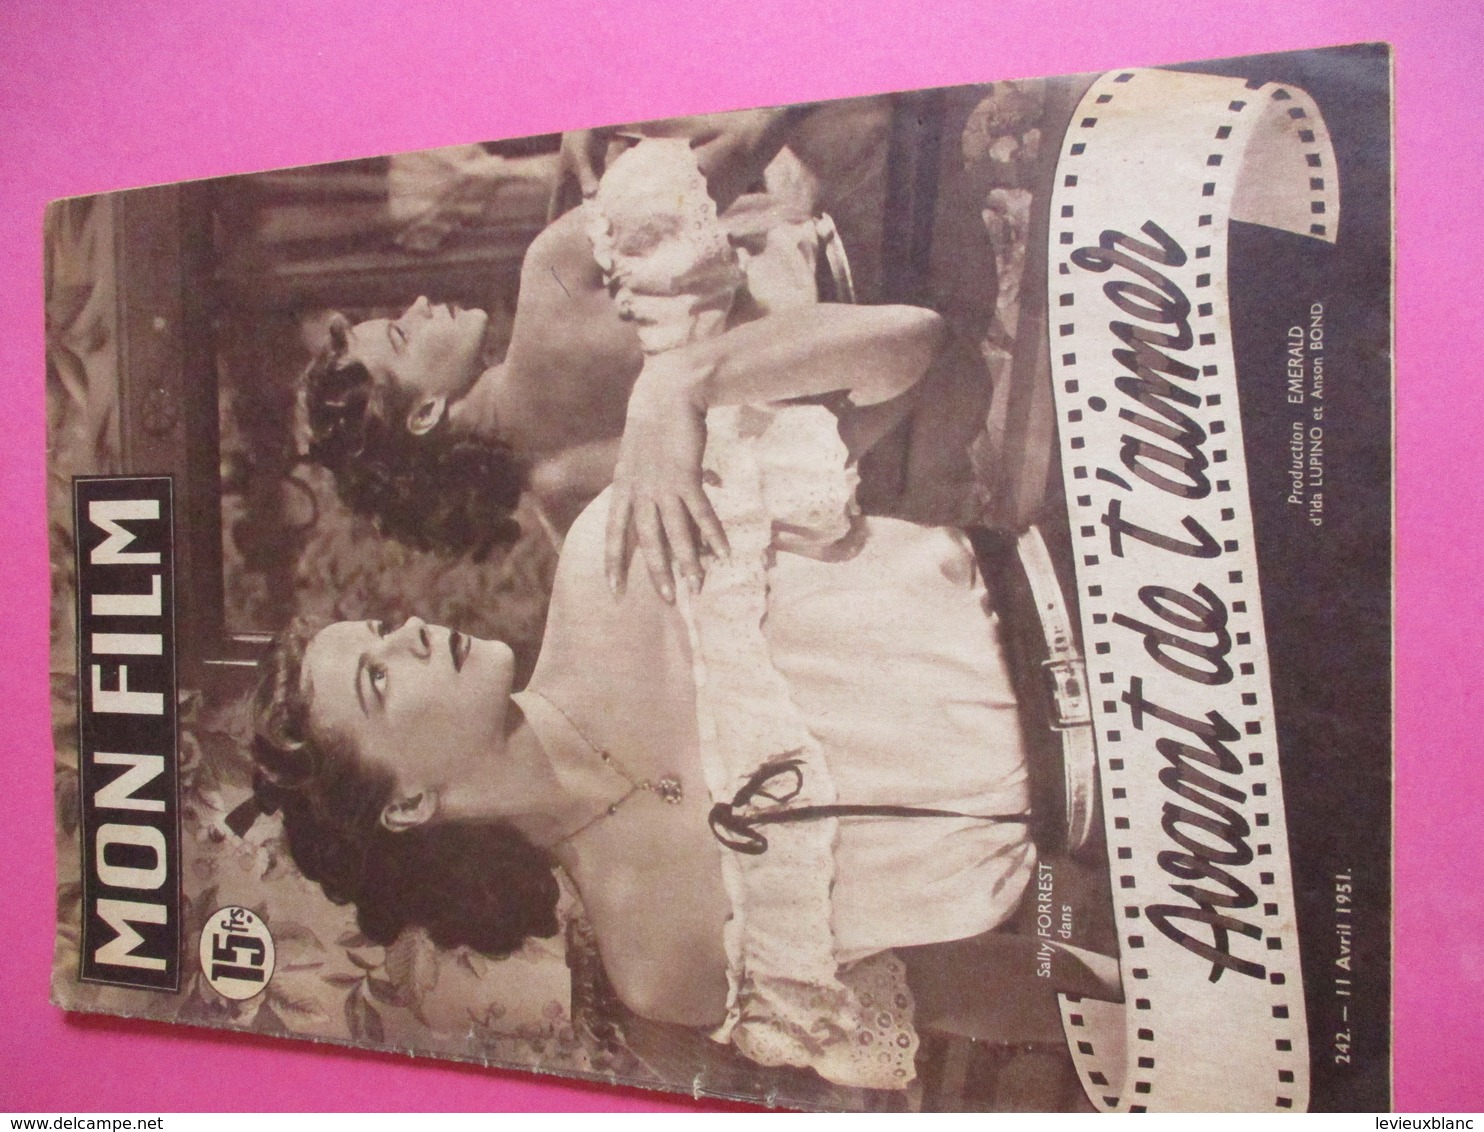 Cinéma/Revue/Mon Filmt/" Avant De T'aimer"/Sally FOREST, Keefe BRASSELLE/Emerald / Elmer Clifton//1951   CIN92 - Otros & Sin Clasificación